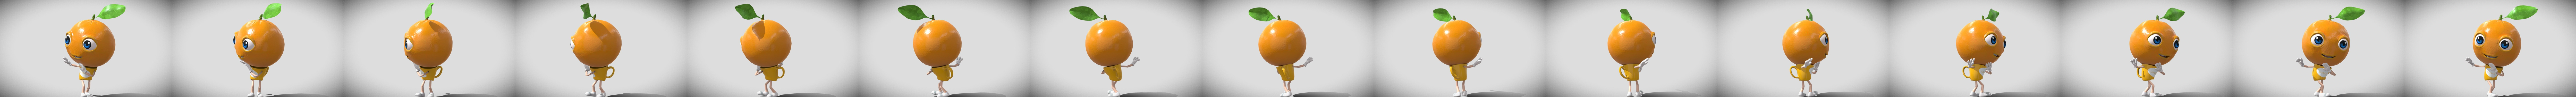 orange coloured cartoon characters